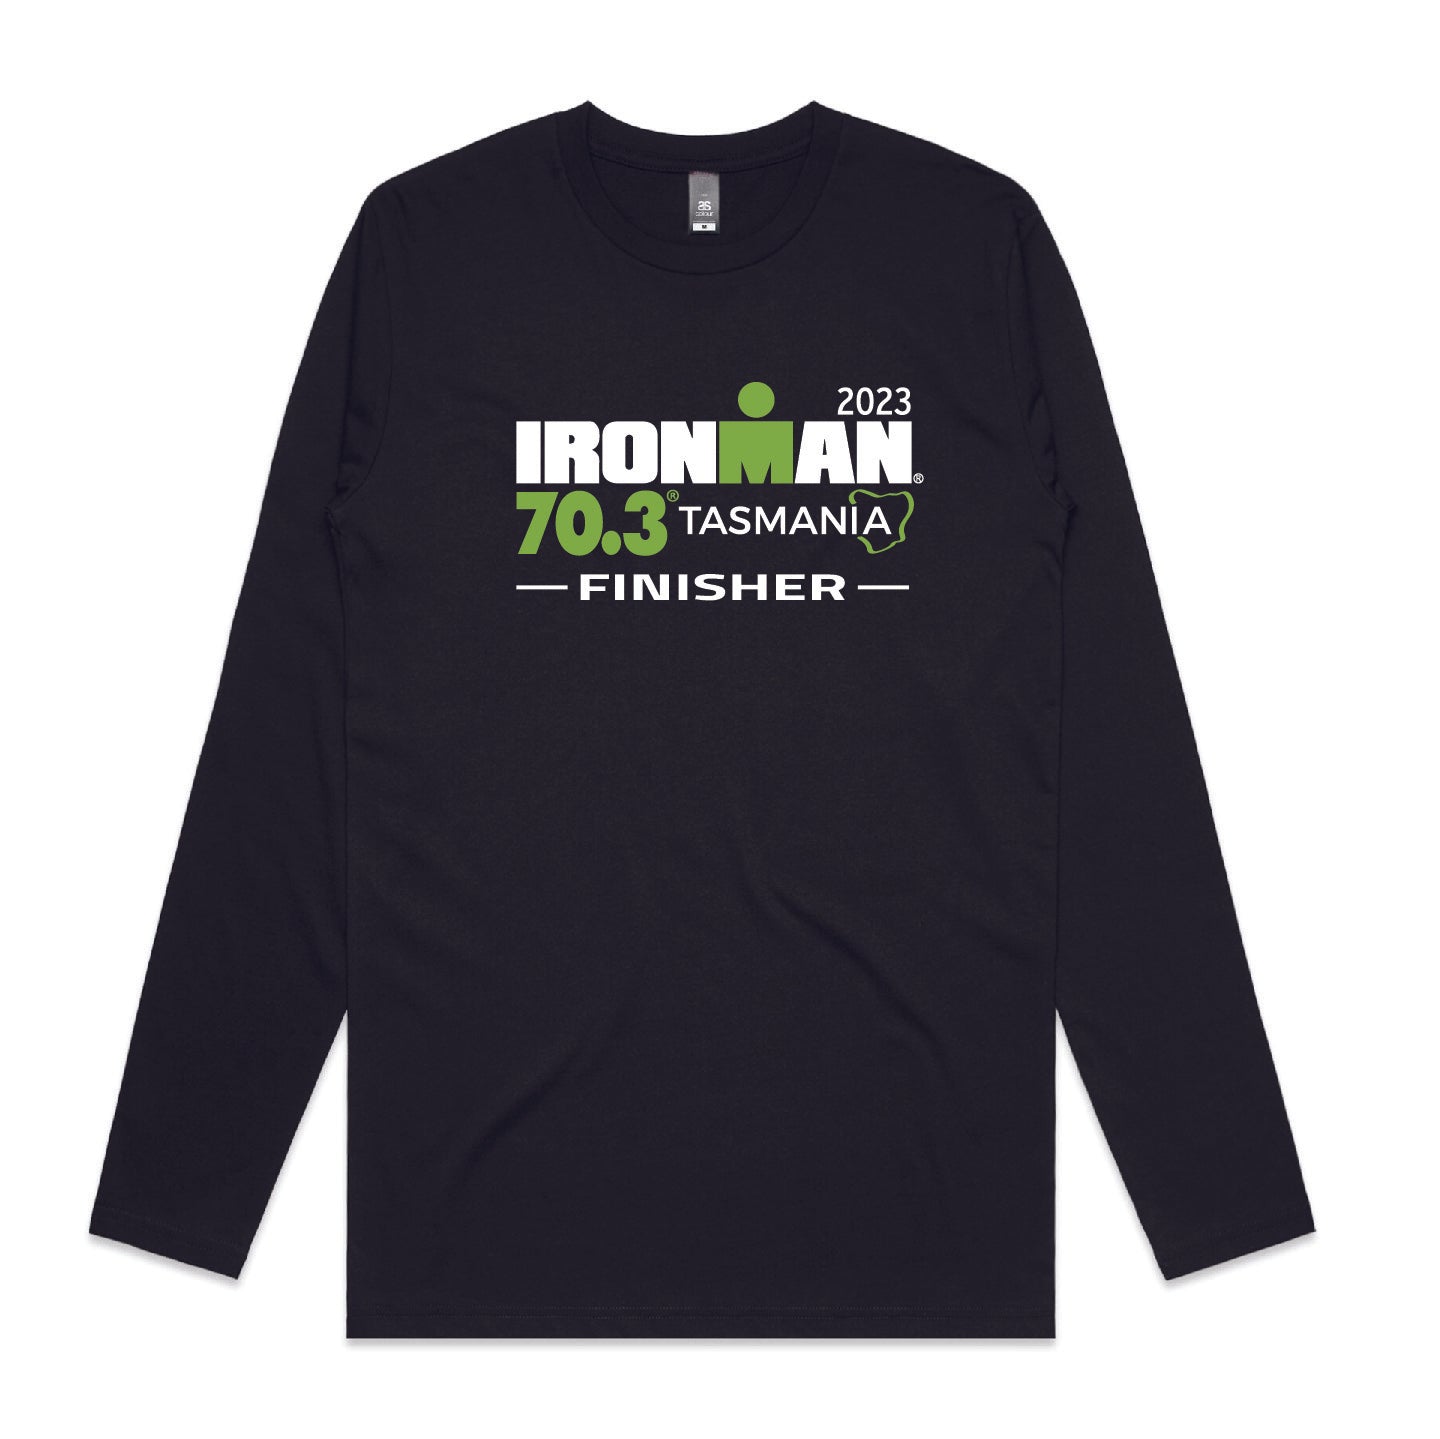 IRONMAN 70.3 Tasmania Men's Finisher Long Sleeve Shirt 2023